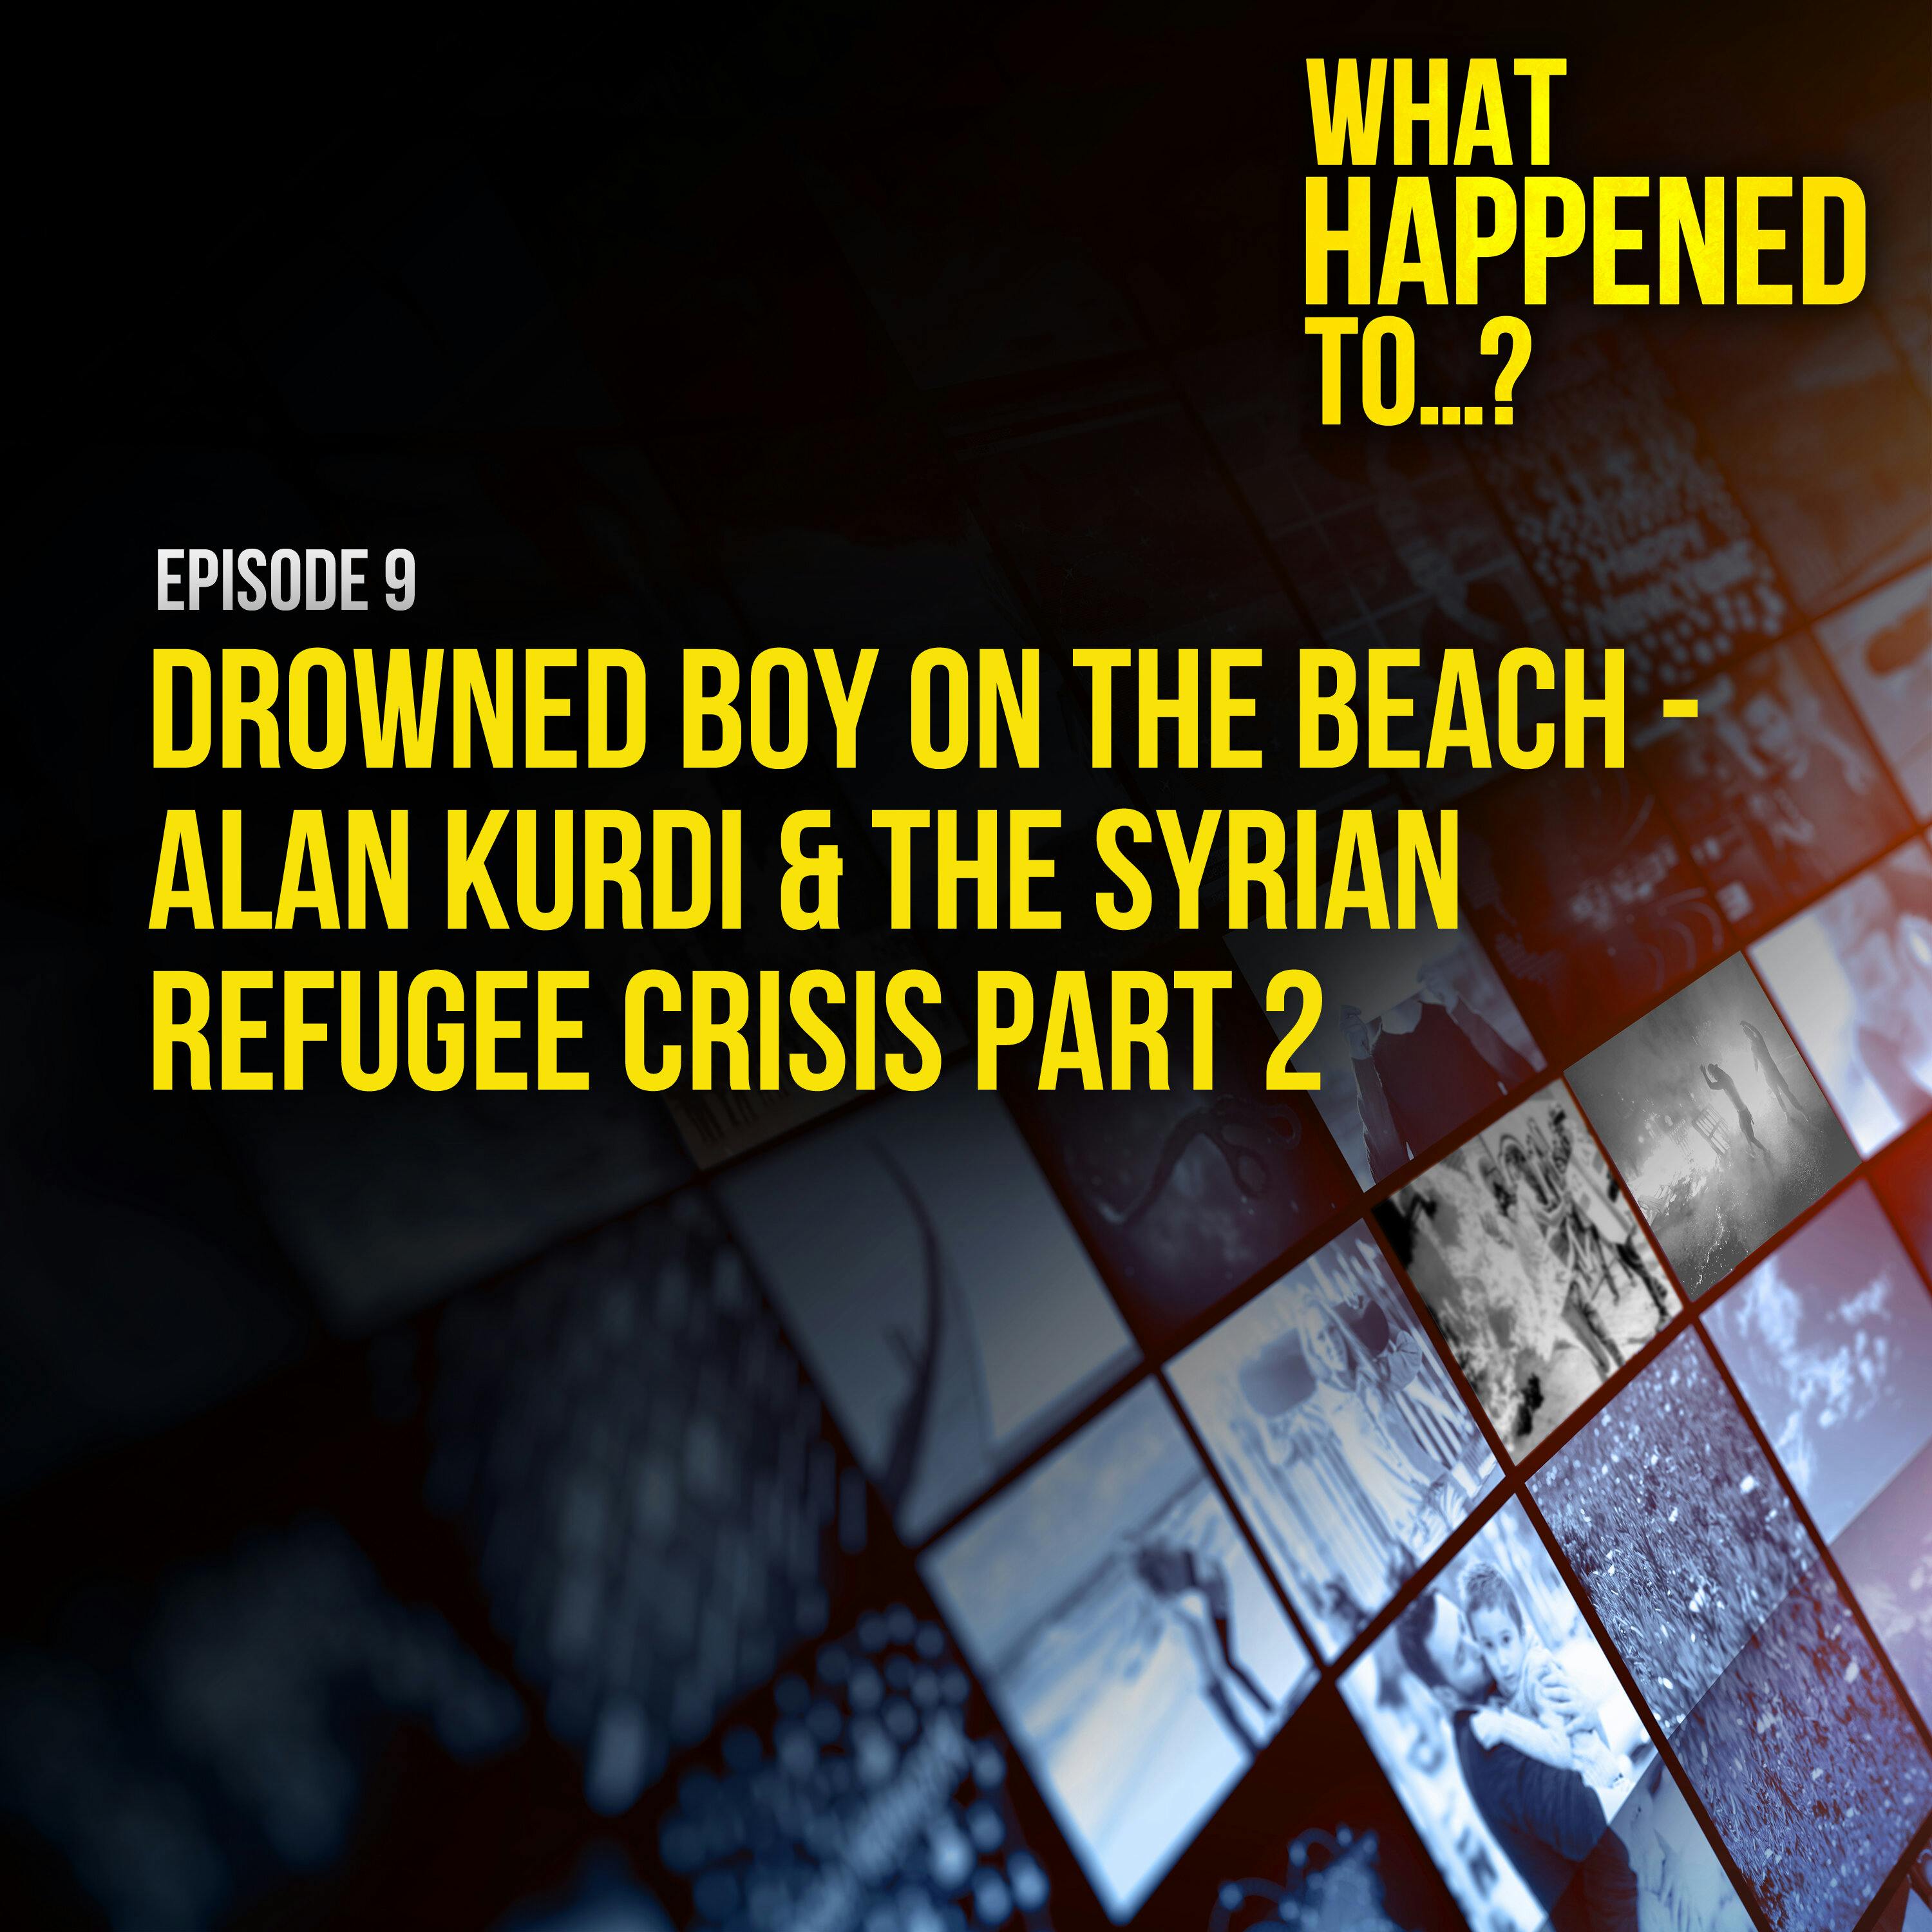 Drowned boy on the beach - Alan Kurdi & the Syrian refugee crisis Part 2